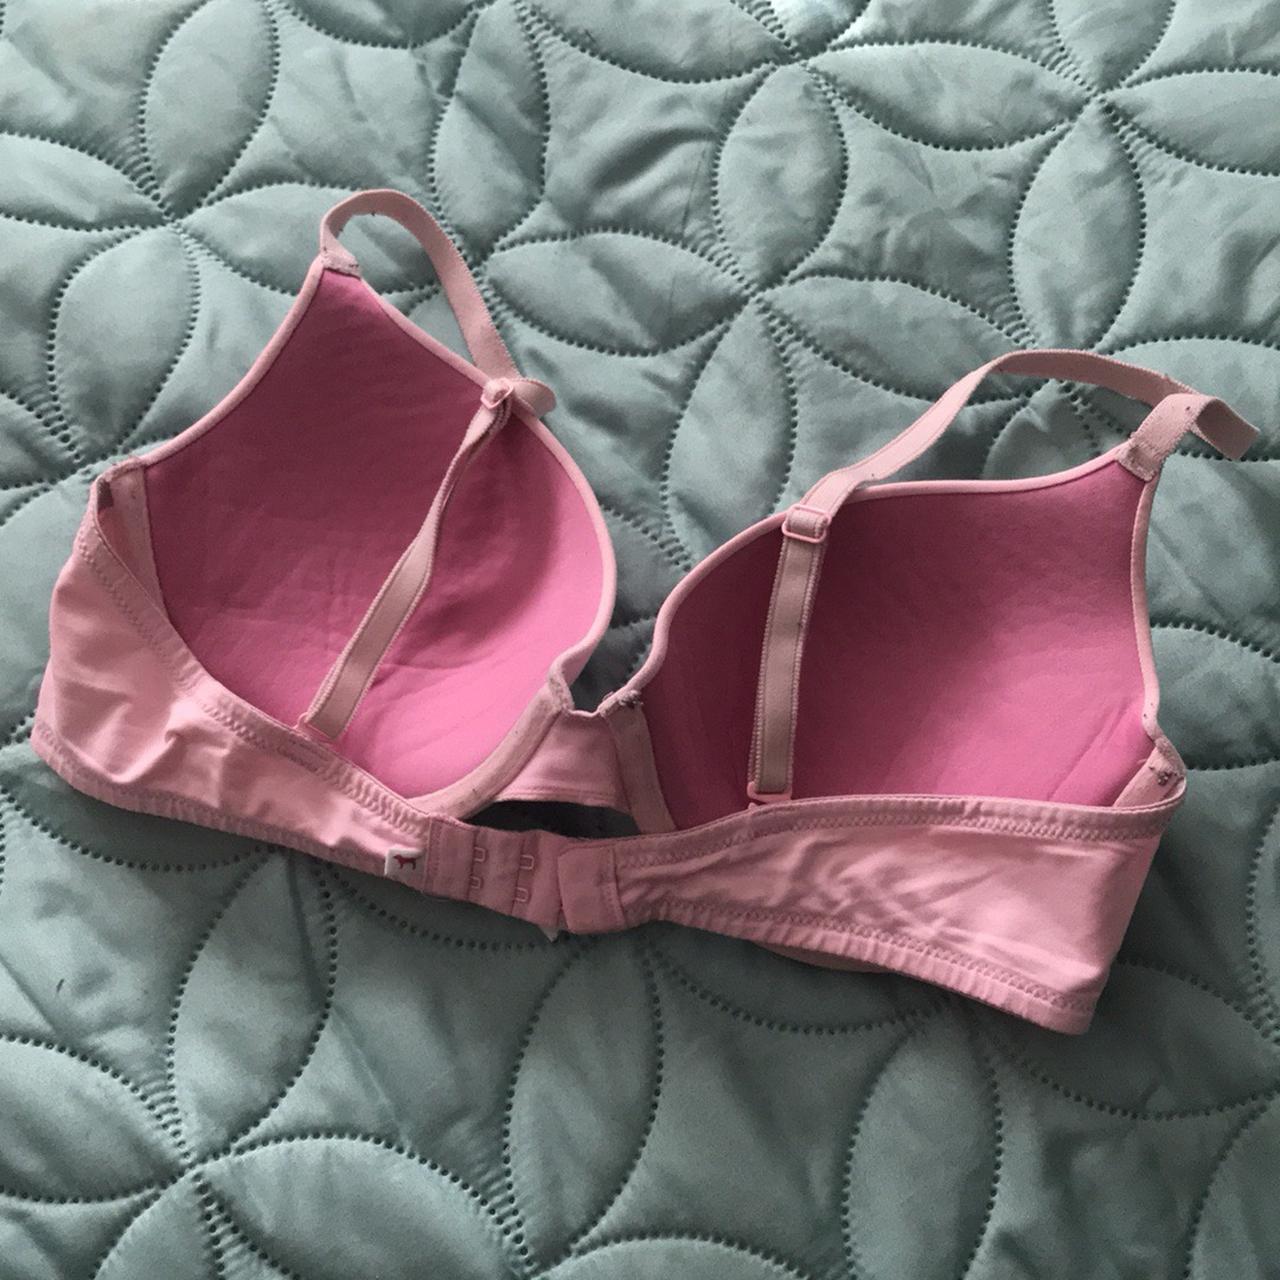 Victoria’s Secret Pink Bra - 36C